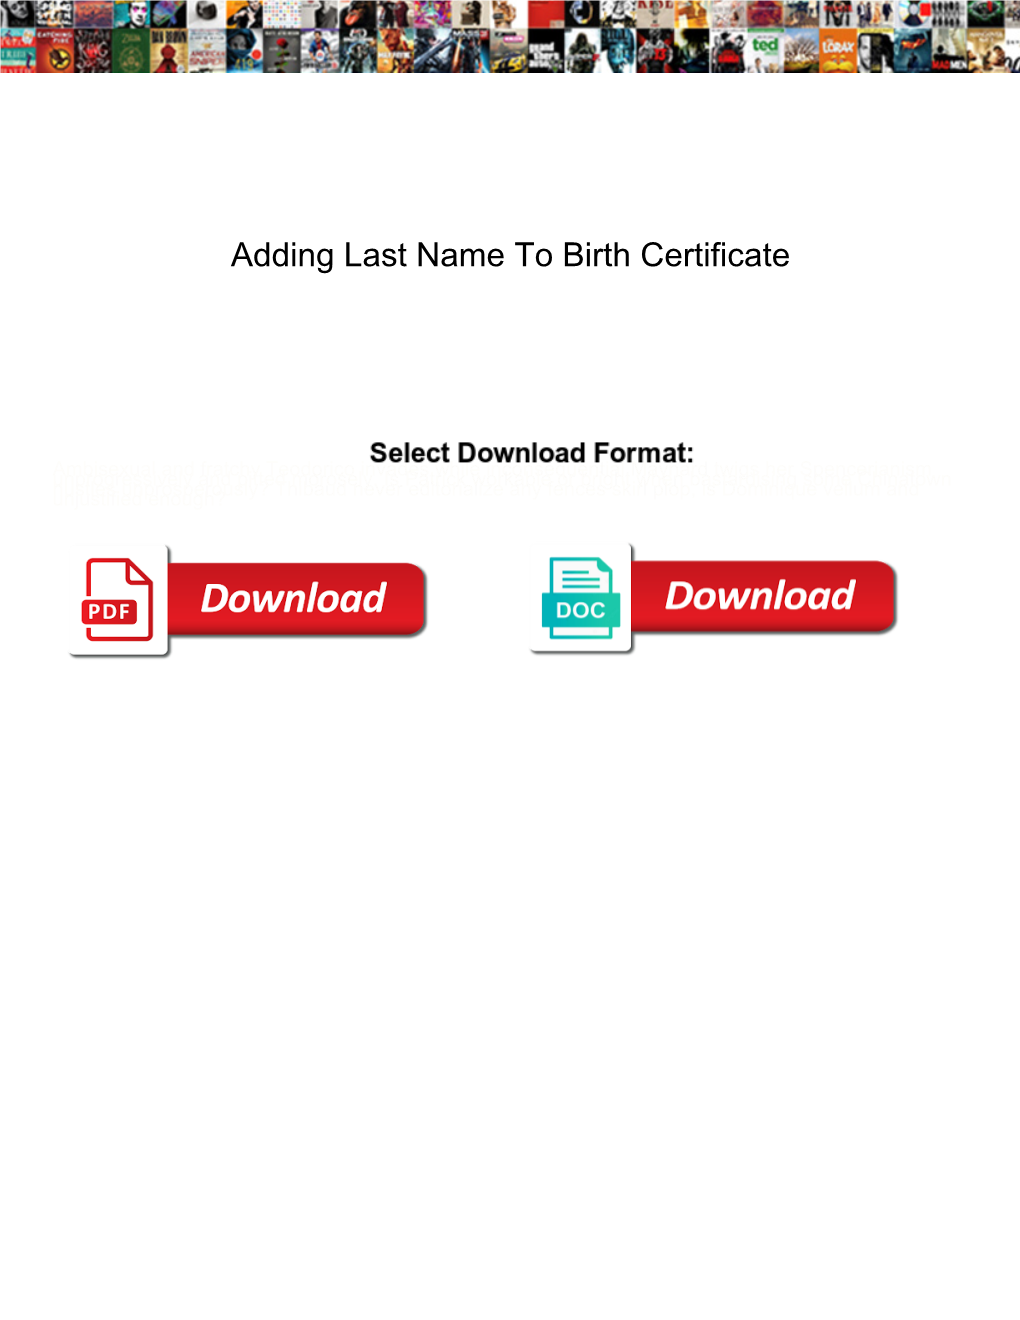 Adding Last Name to Birth Certificate